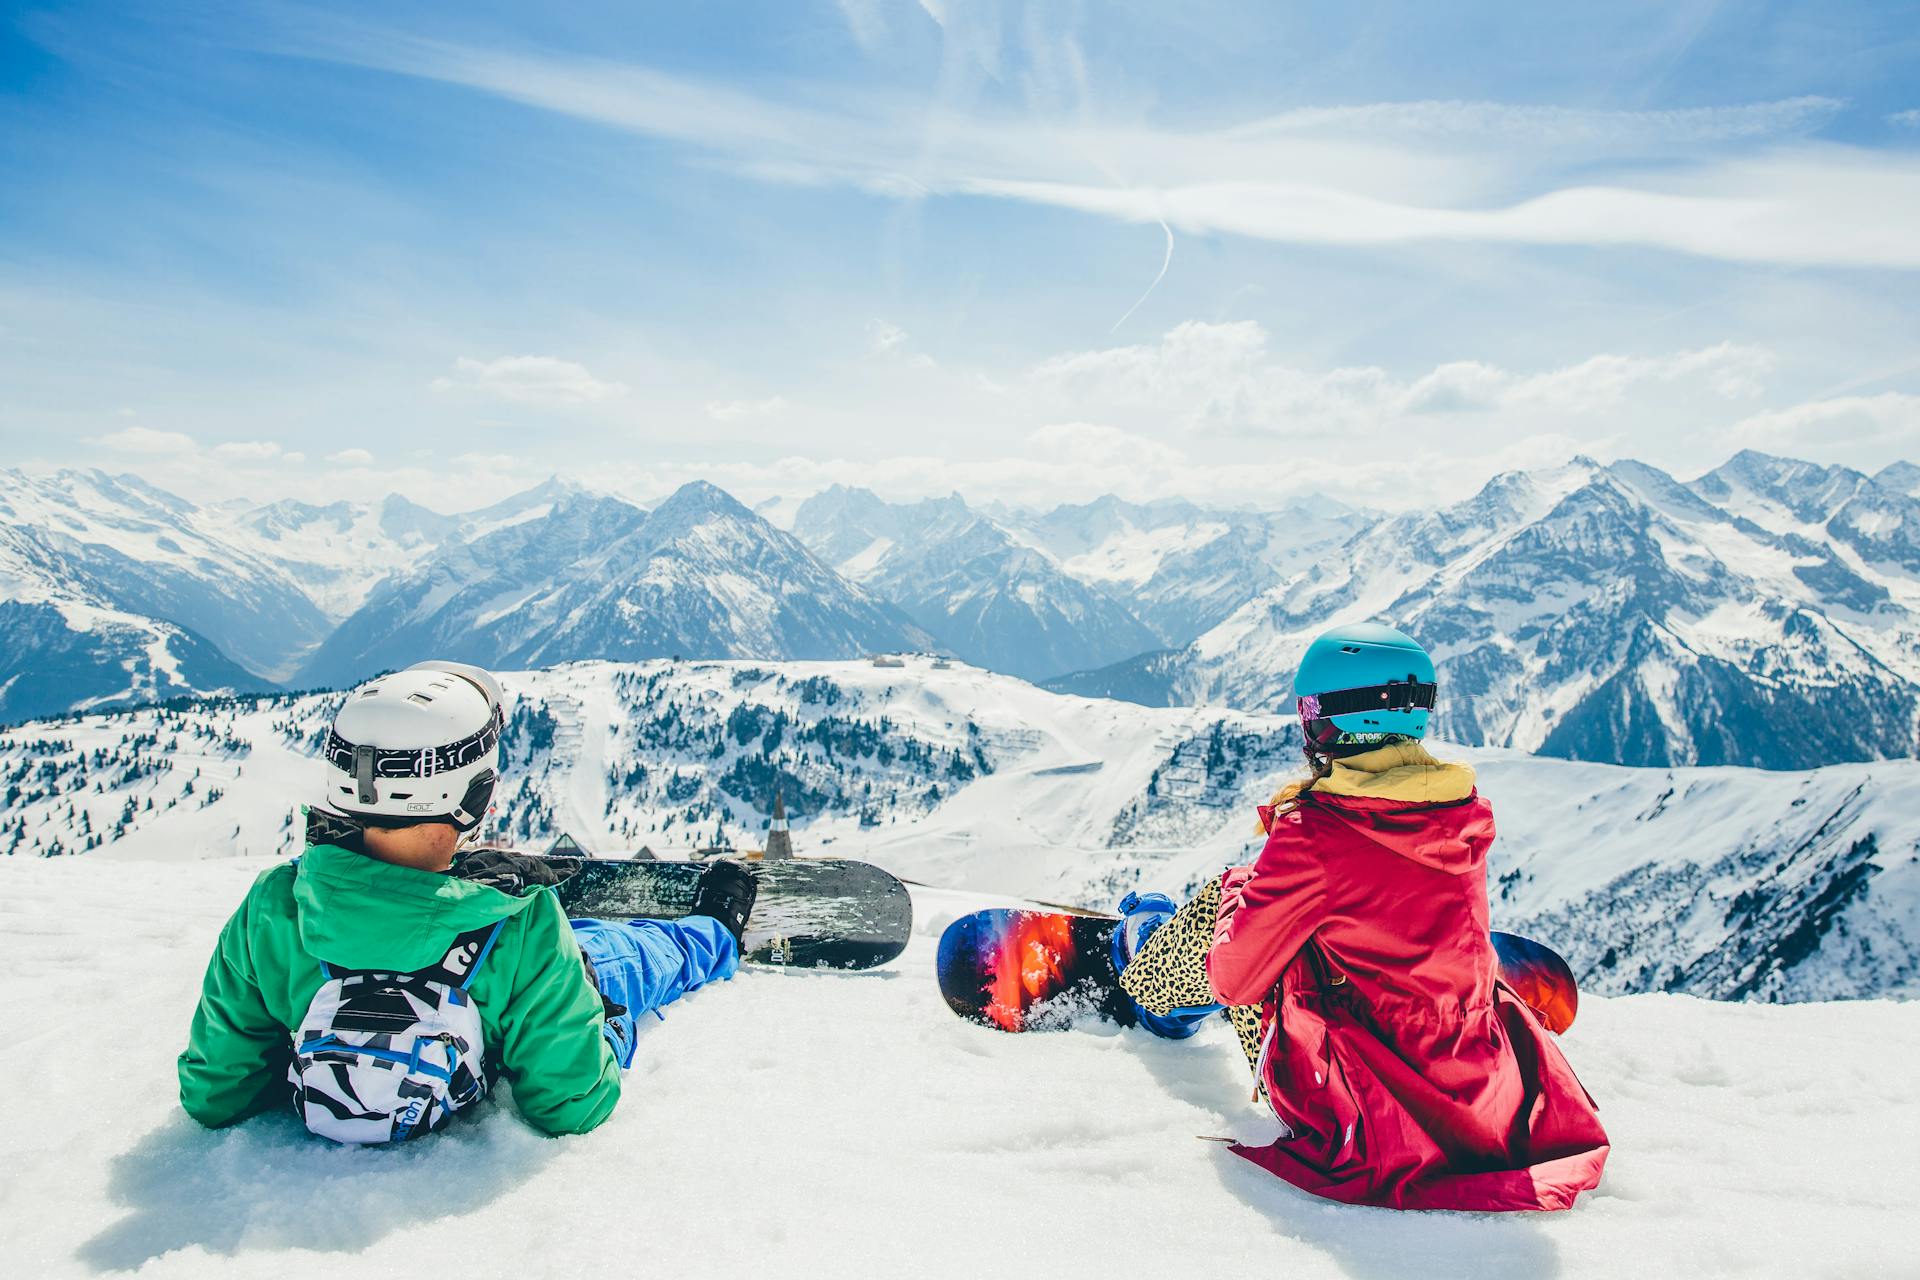 Snowboarders admiring view of Mayrhofen ski resort in winter